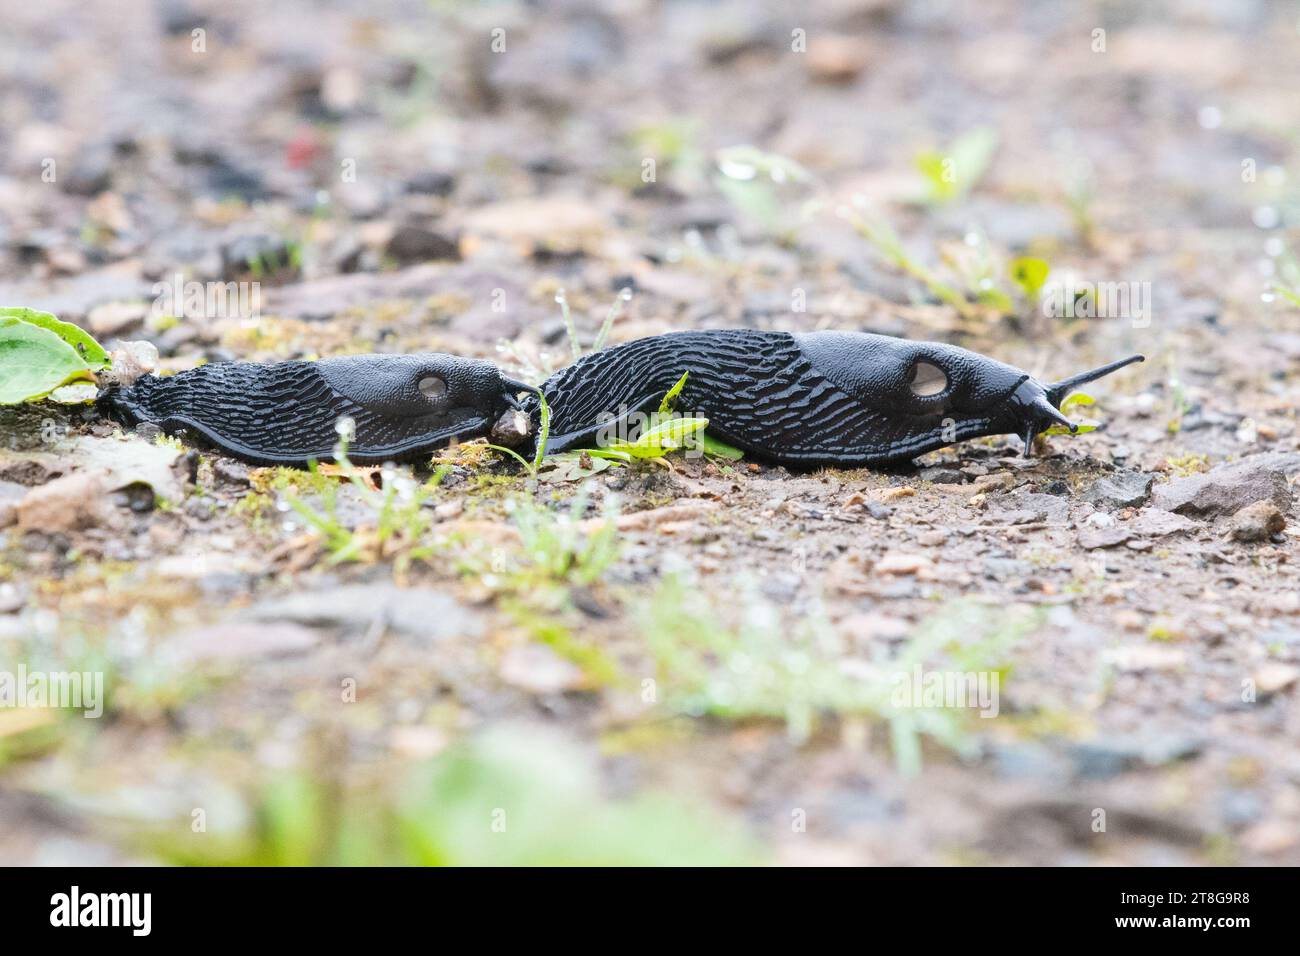 Trail following european black slugs - slug courtship and mating - UK Stock Photo